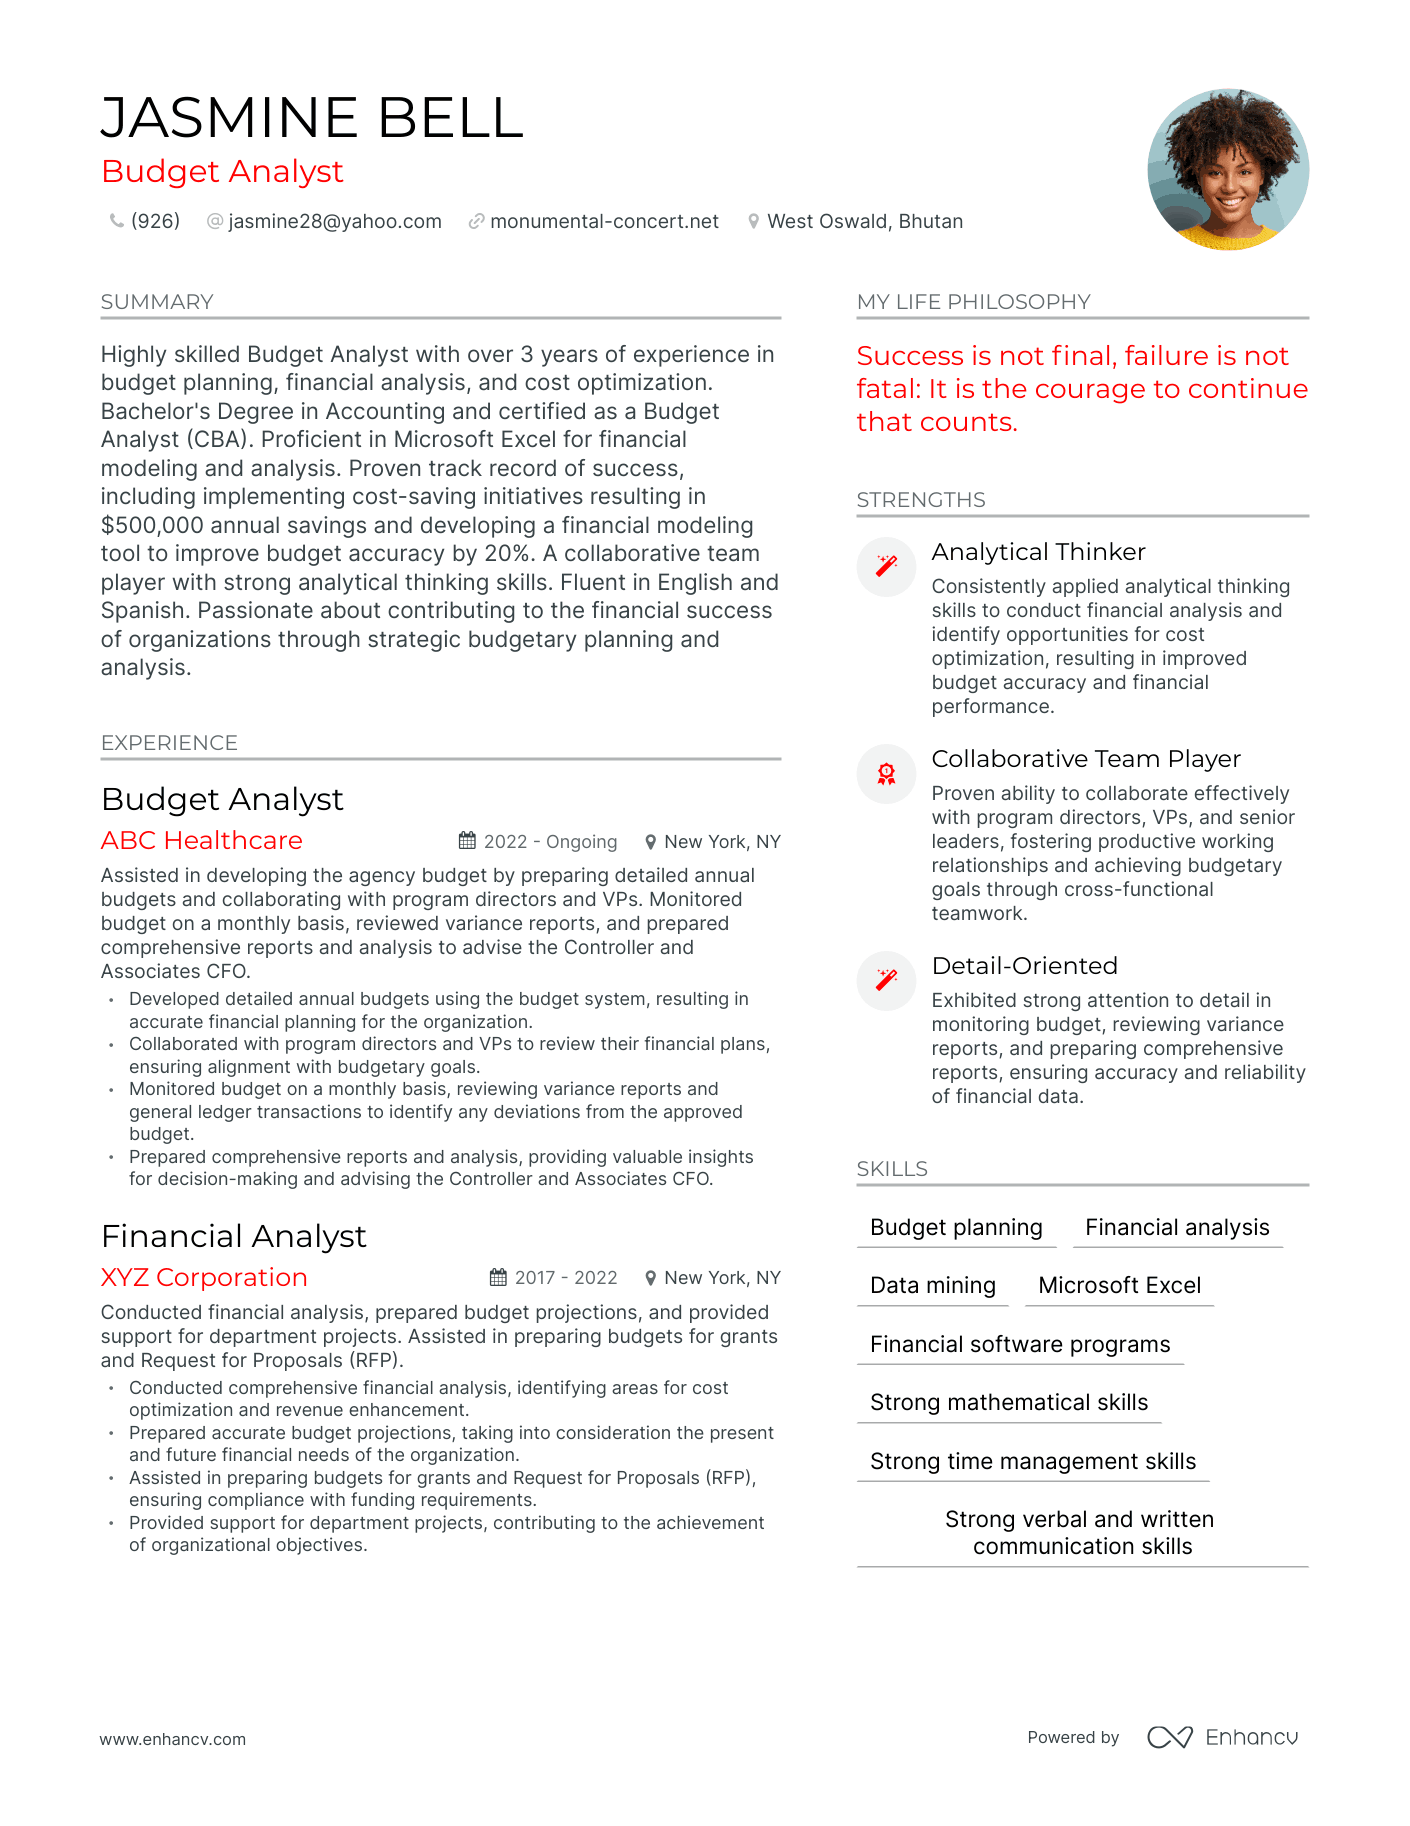 Budget Analyst resume example